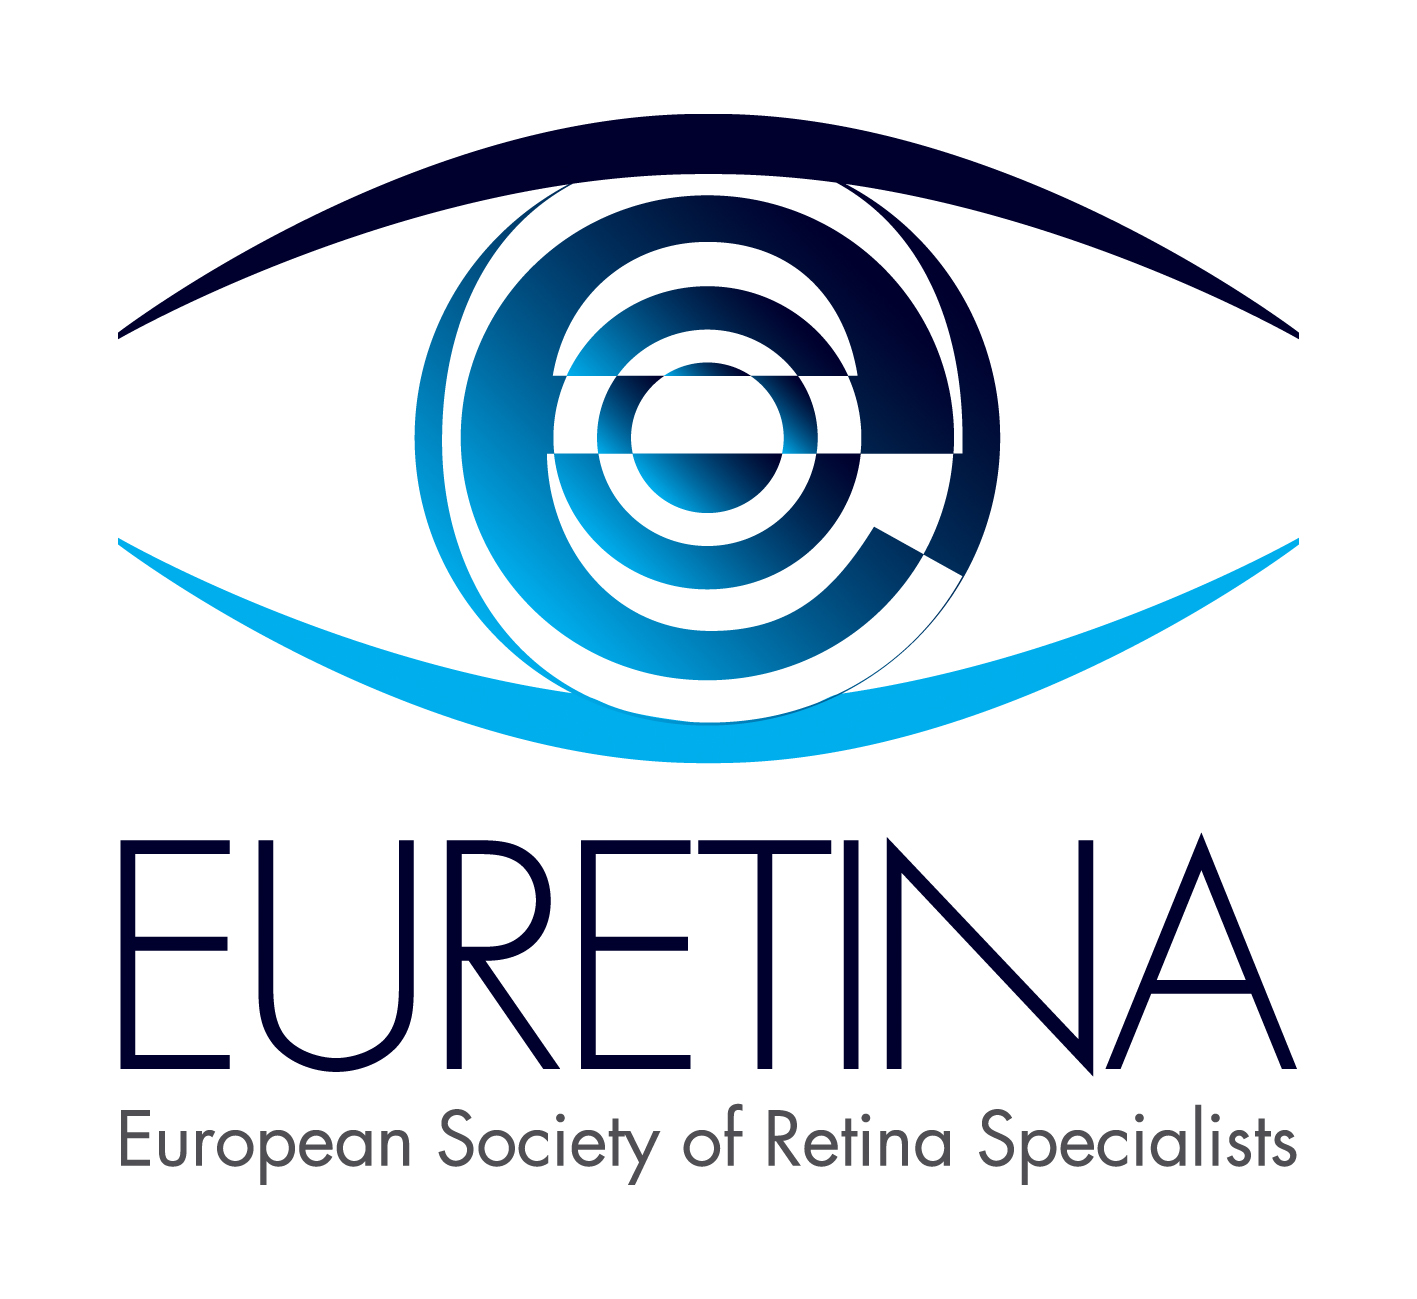 EURETINA - European Society of Retina Specialists,